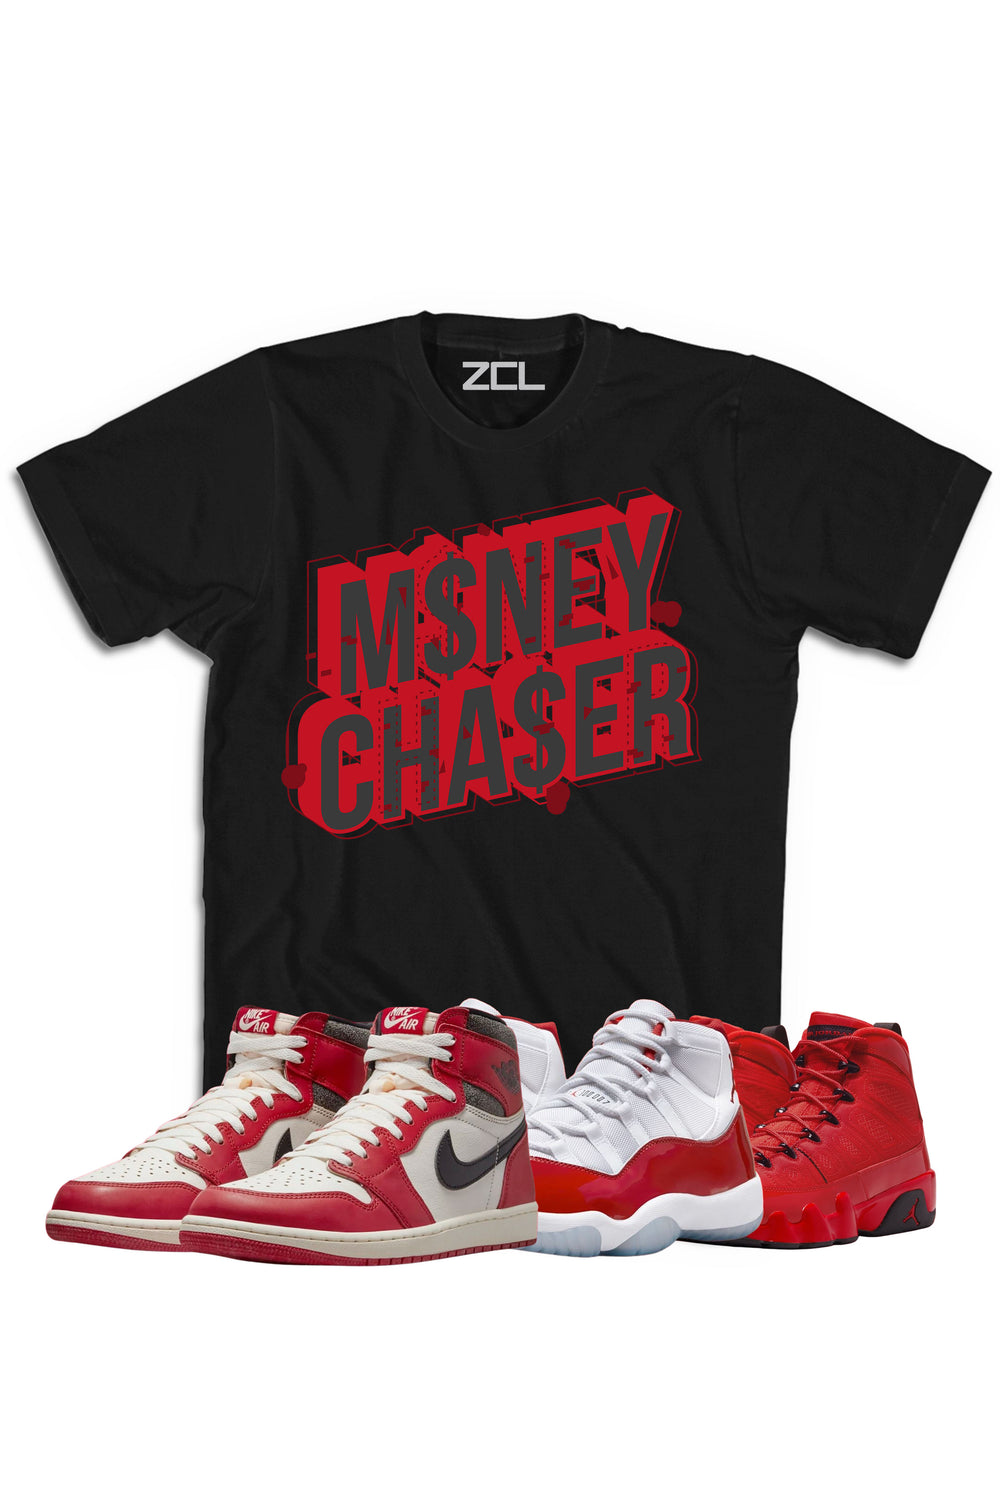 Air Jordan "Money Chaser" Tee Lost & Found - Cherry Red - Zamage